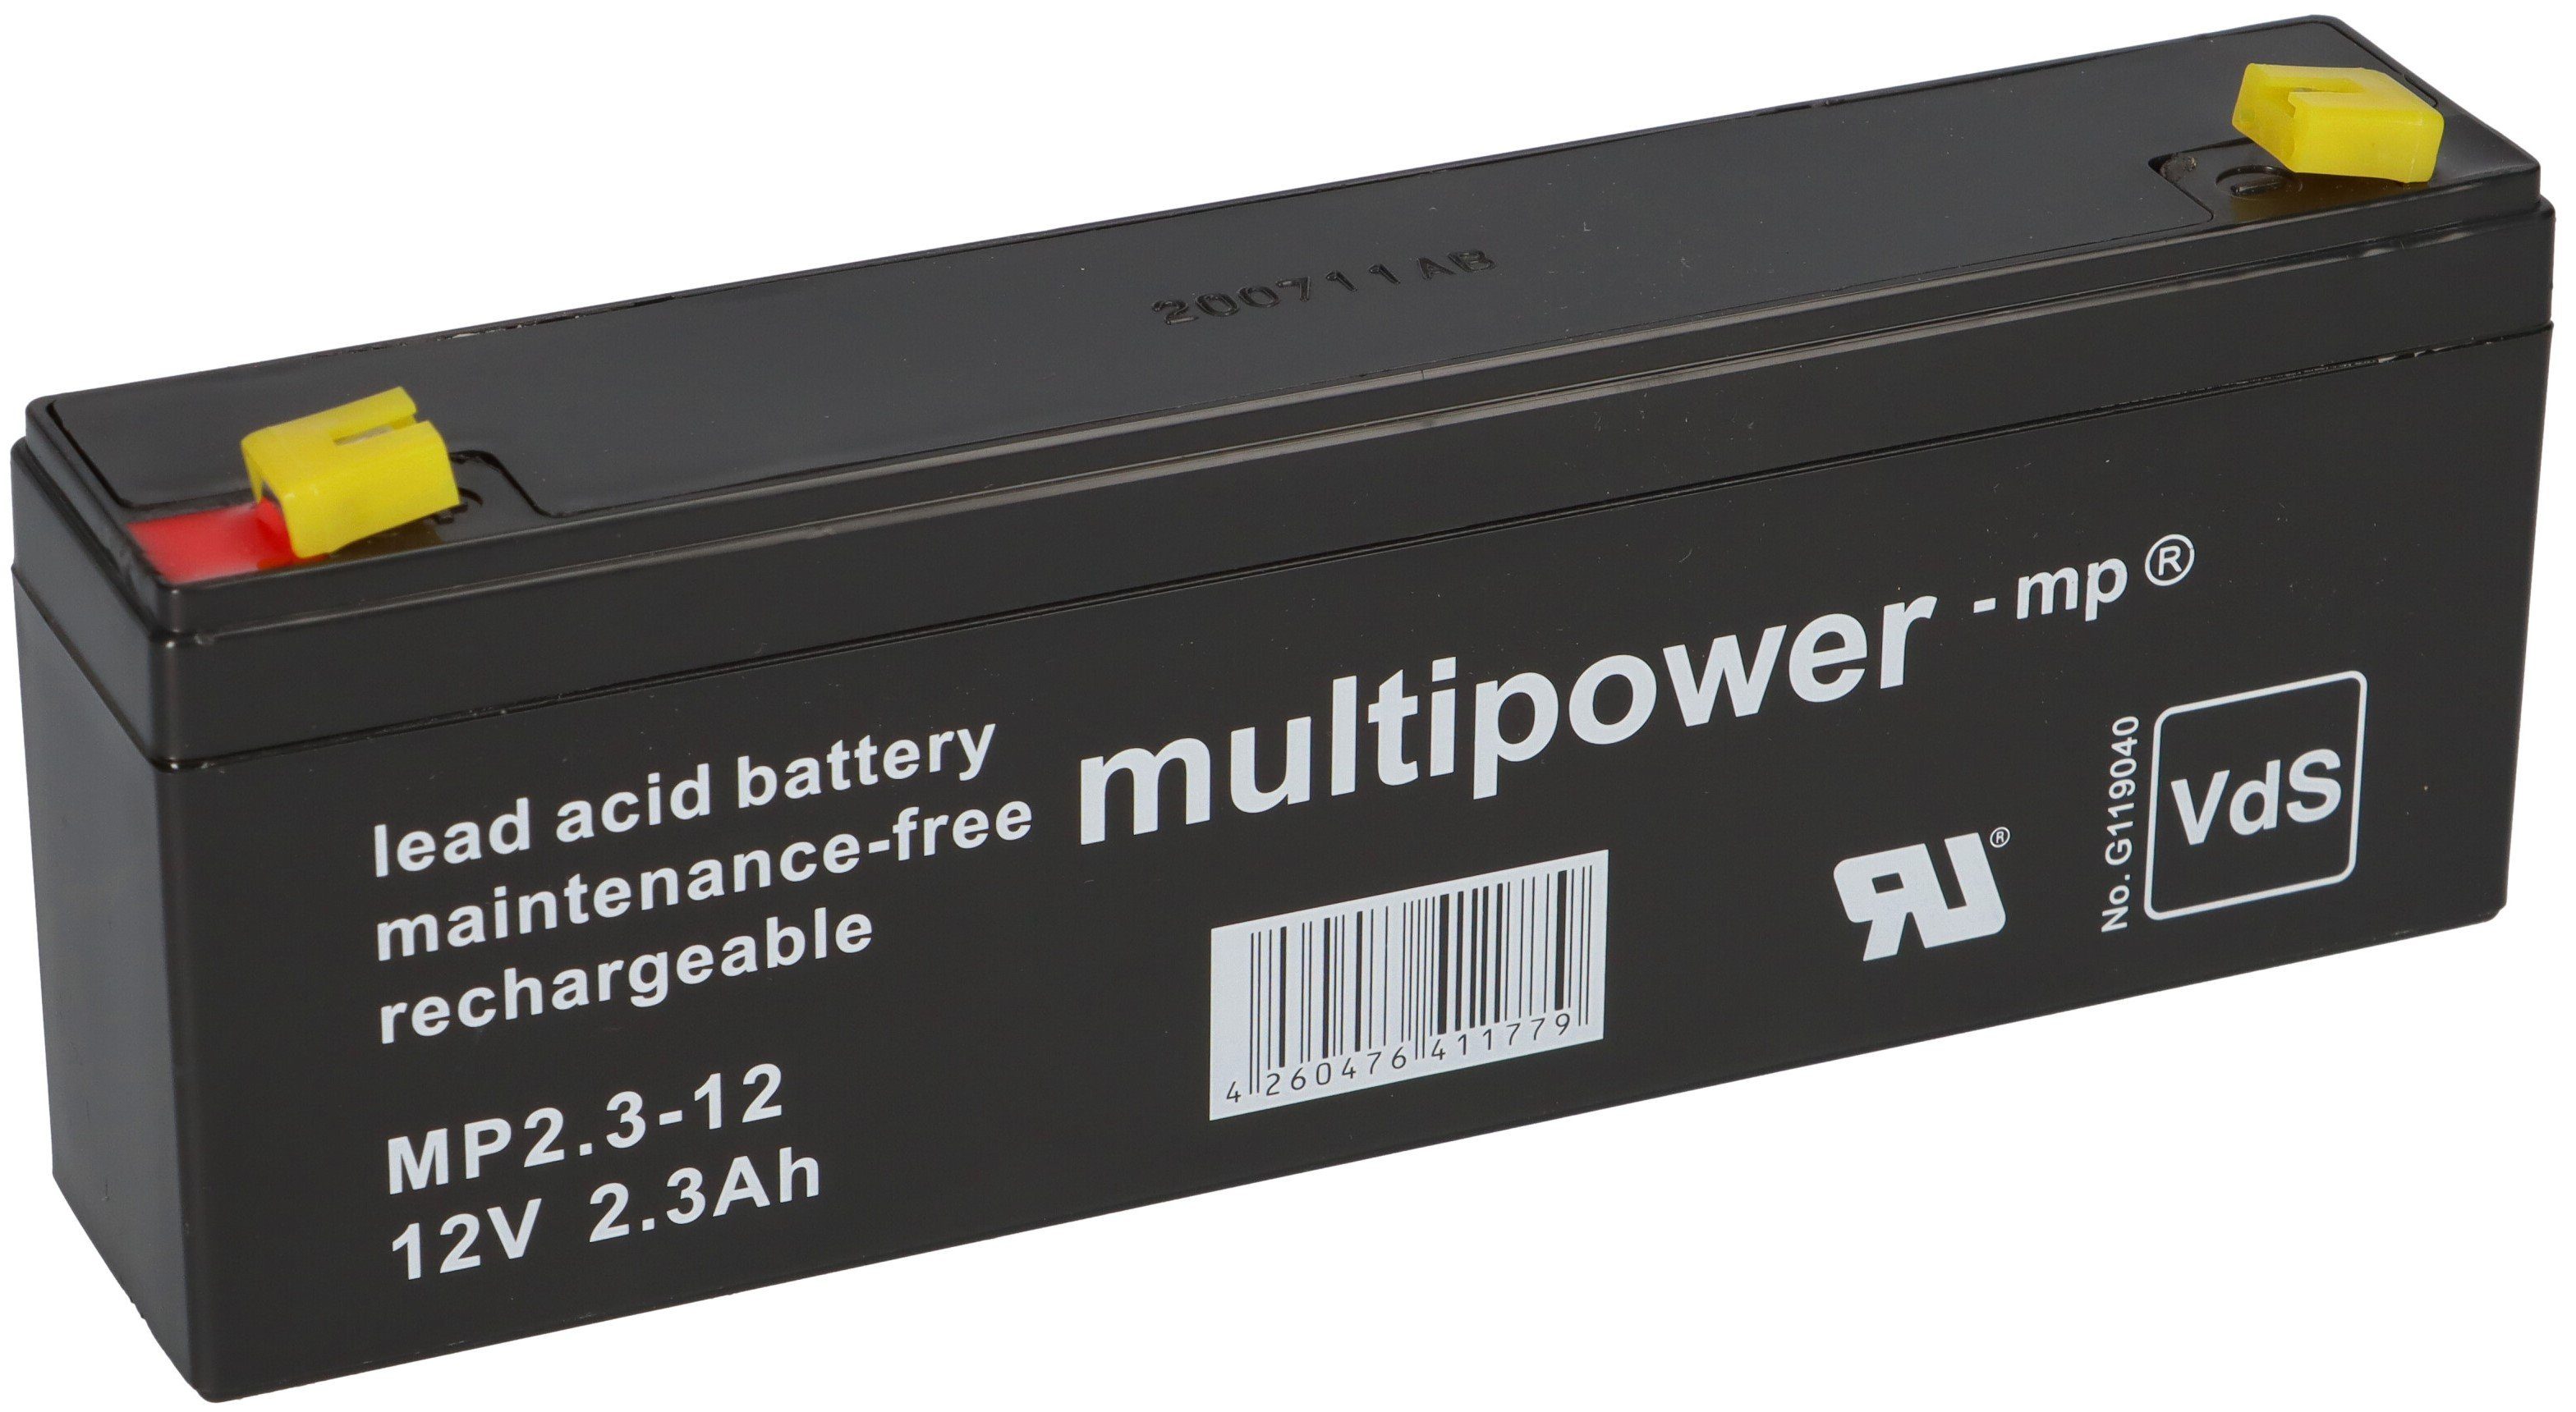 Multipower 1x Multipower 4,8 MP2,3-12 2,3Ah Pb 12V Blei-Akku Faston G107033, Bleiakkus VdS